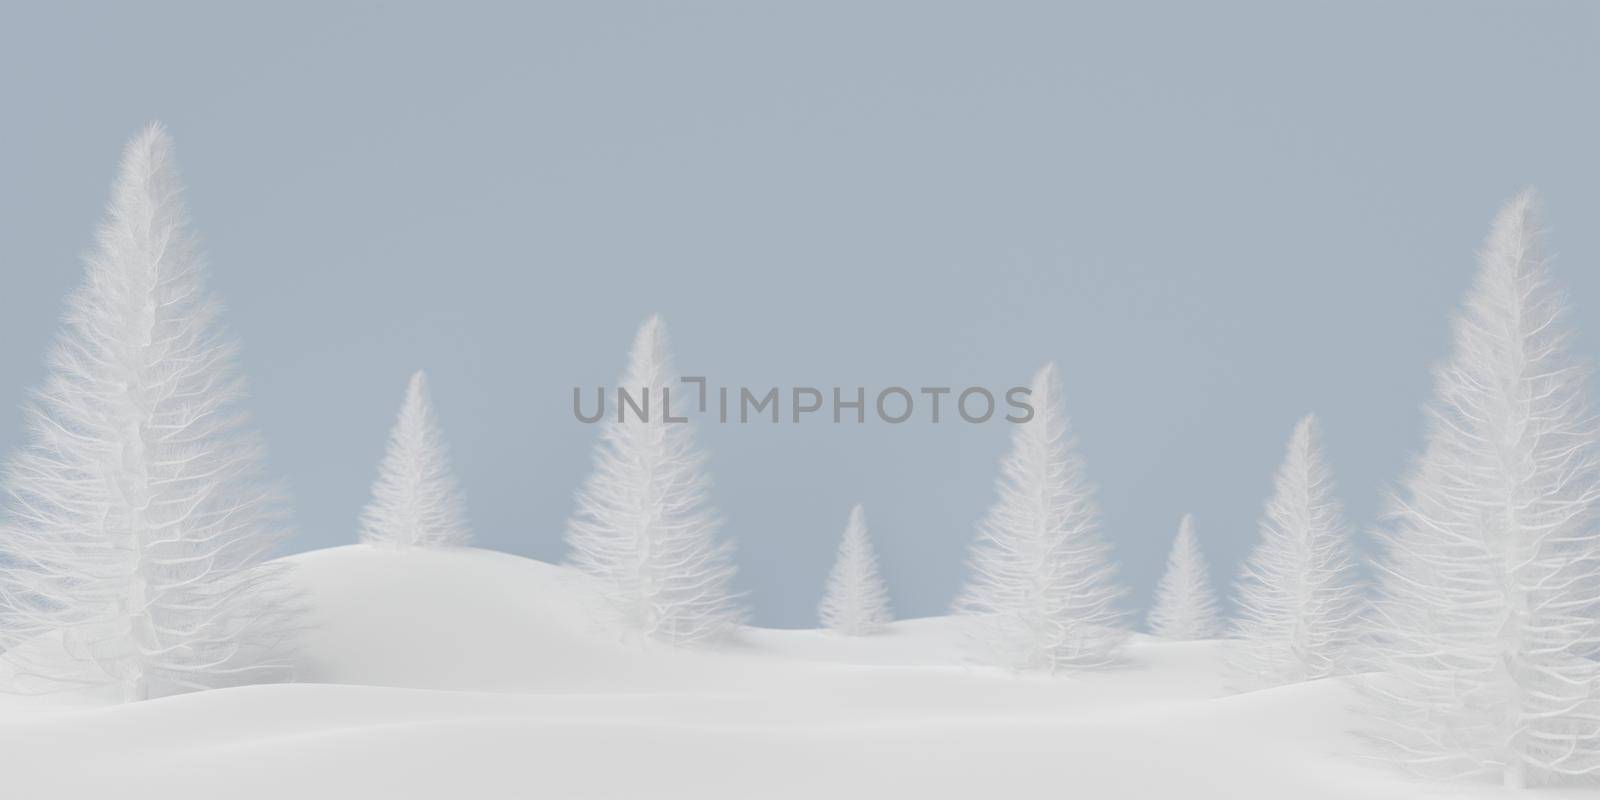 3d illustration blur background of pine forest on snow ground